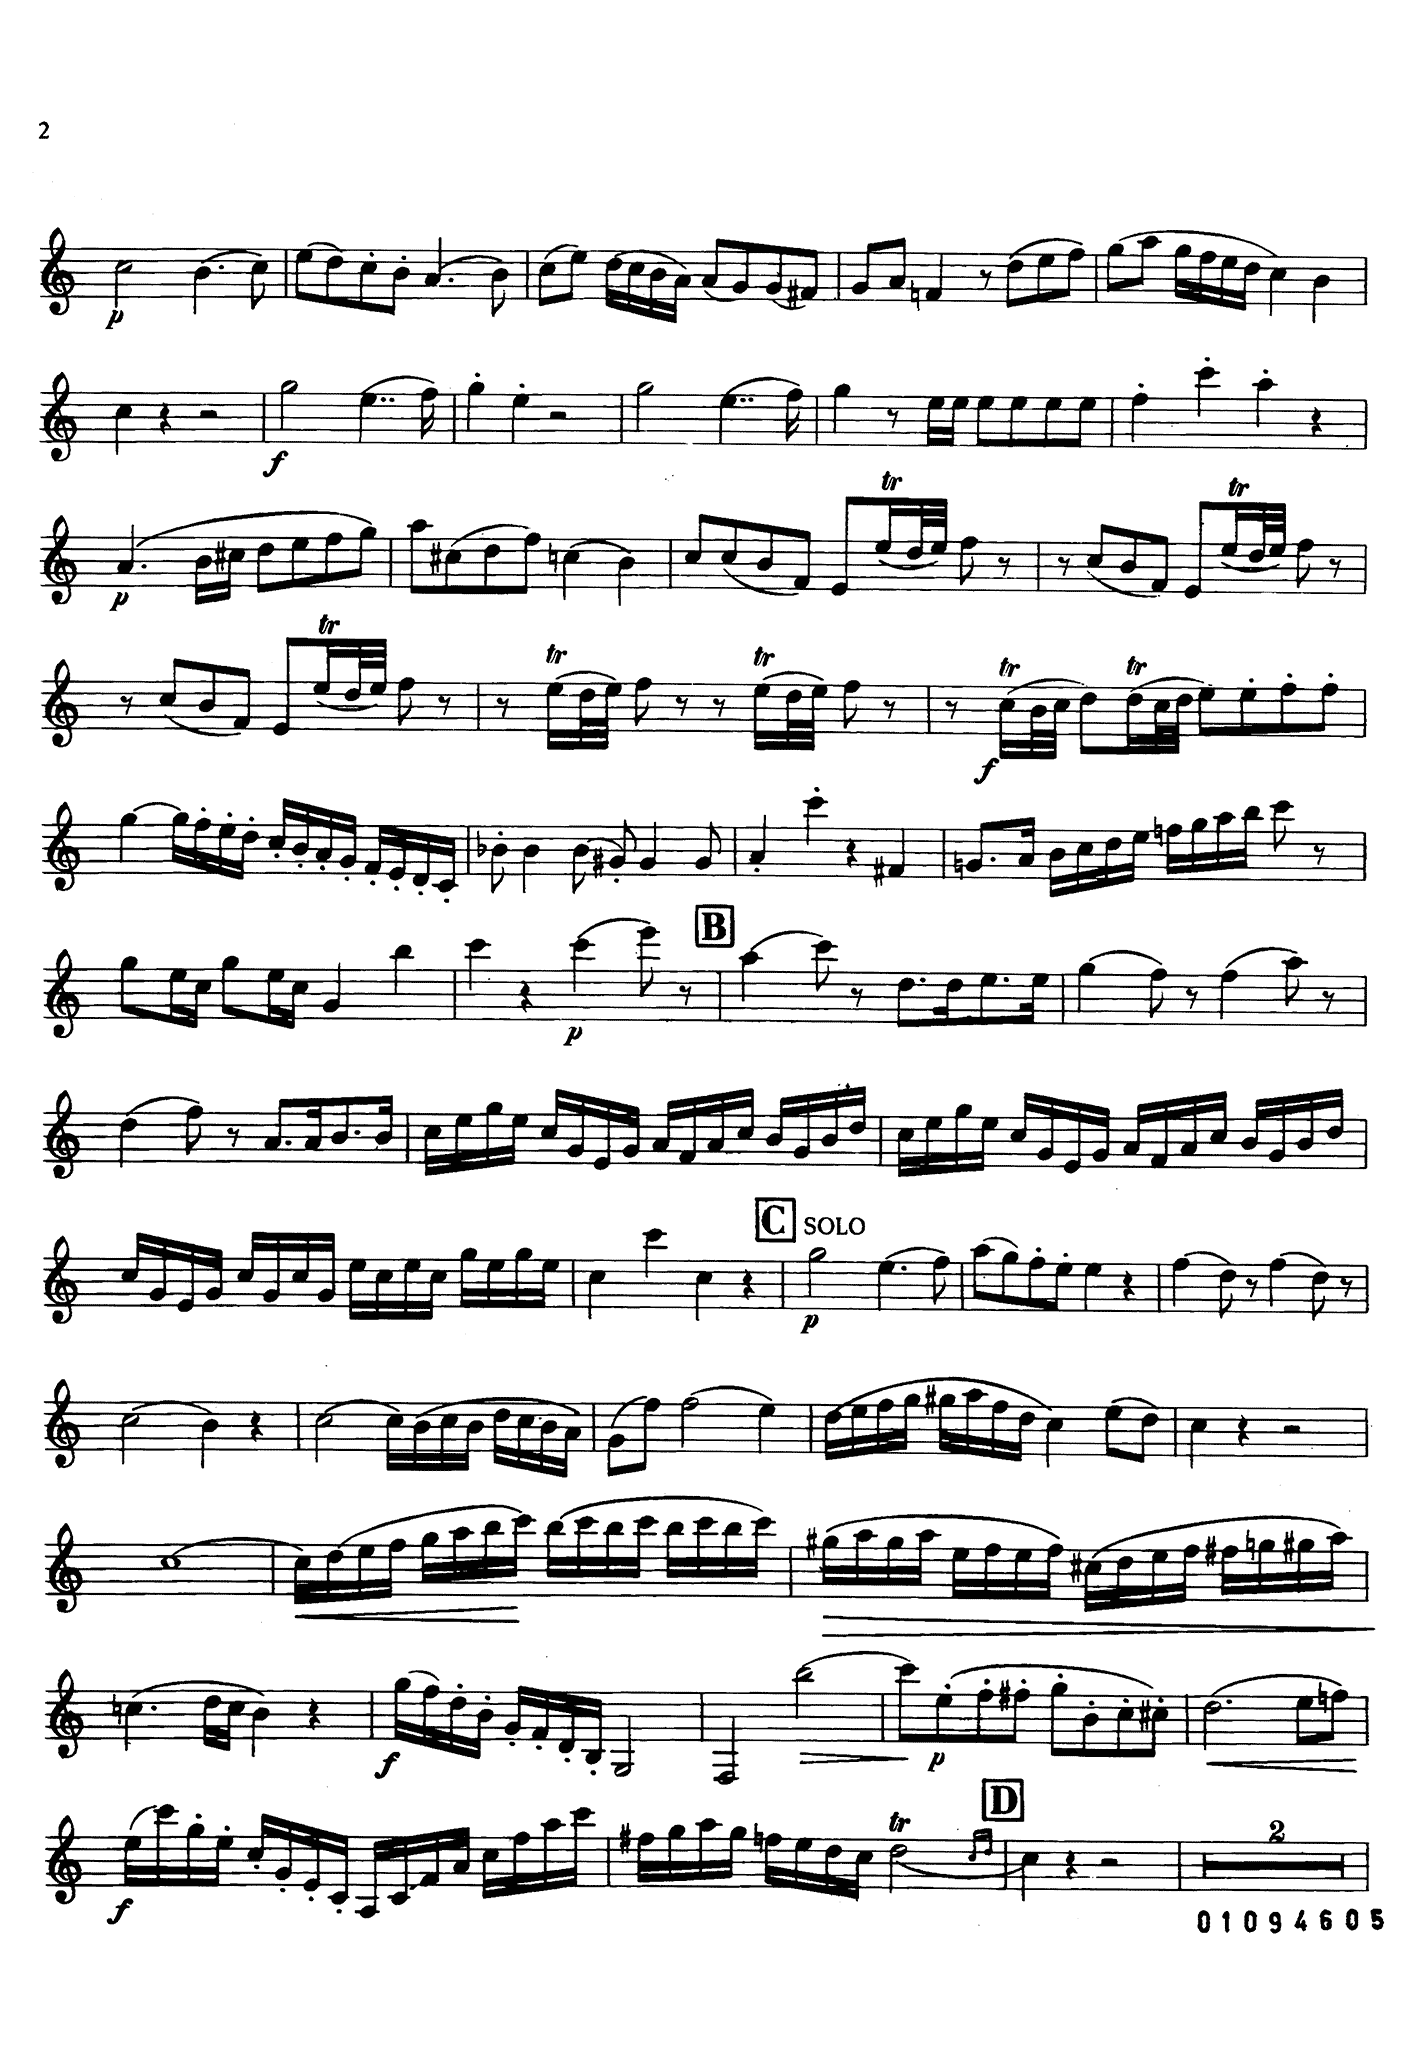 Allegro, from Clarinet Concerto Clarinet part